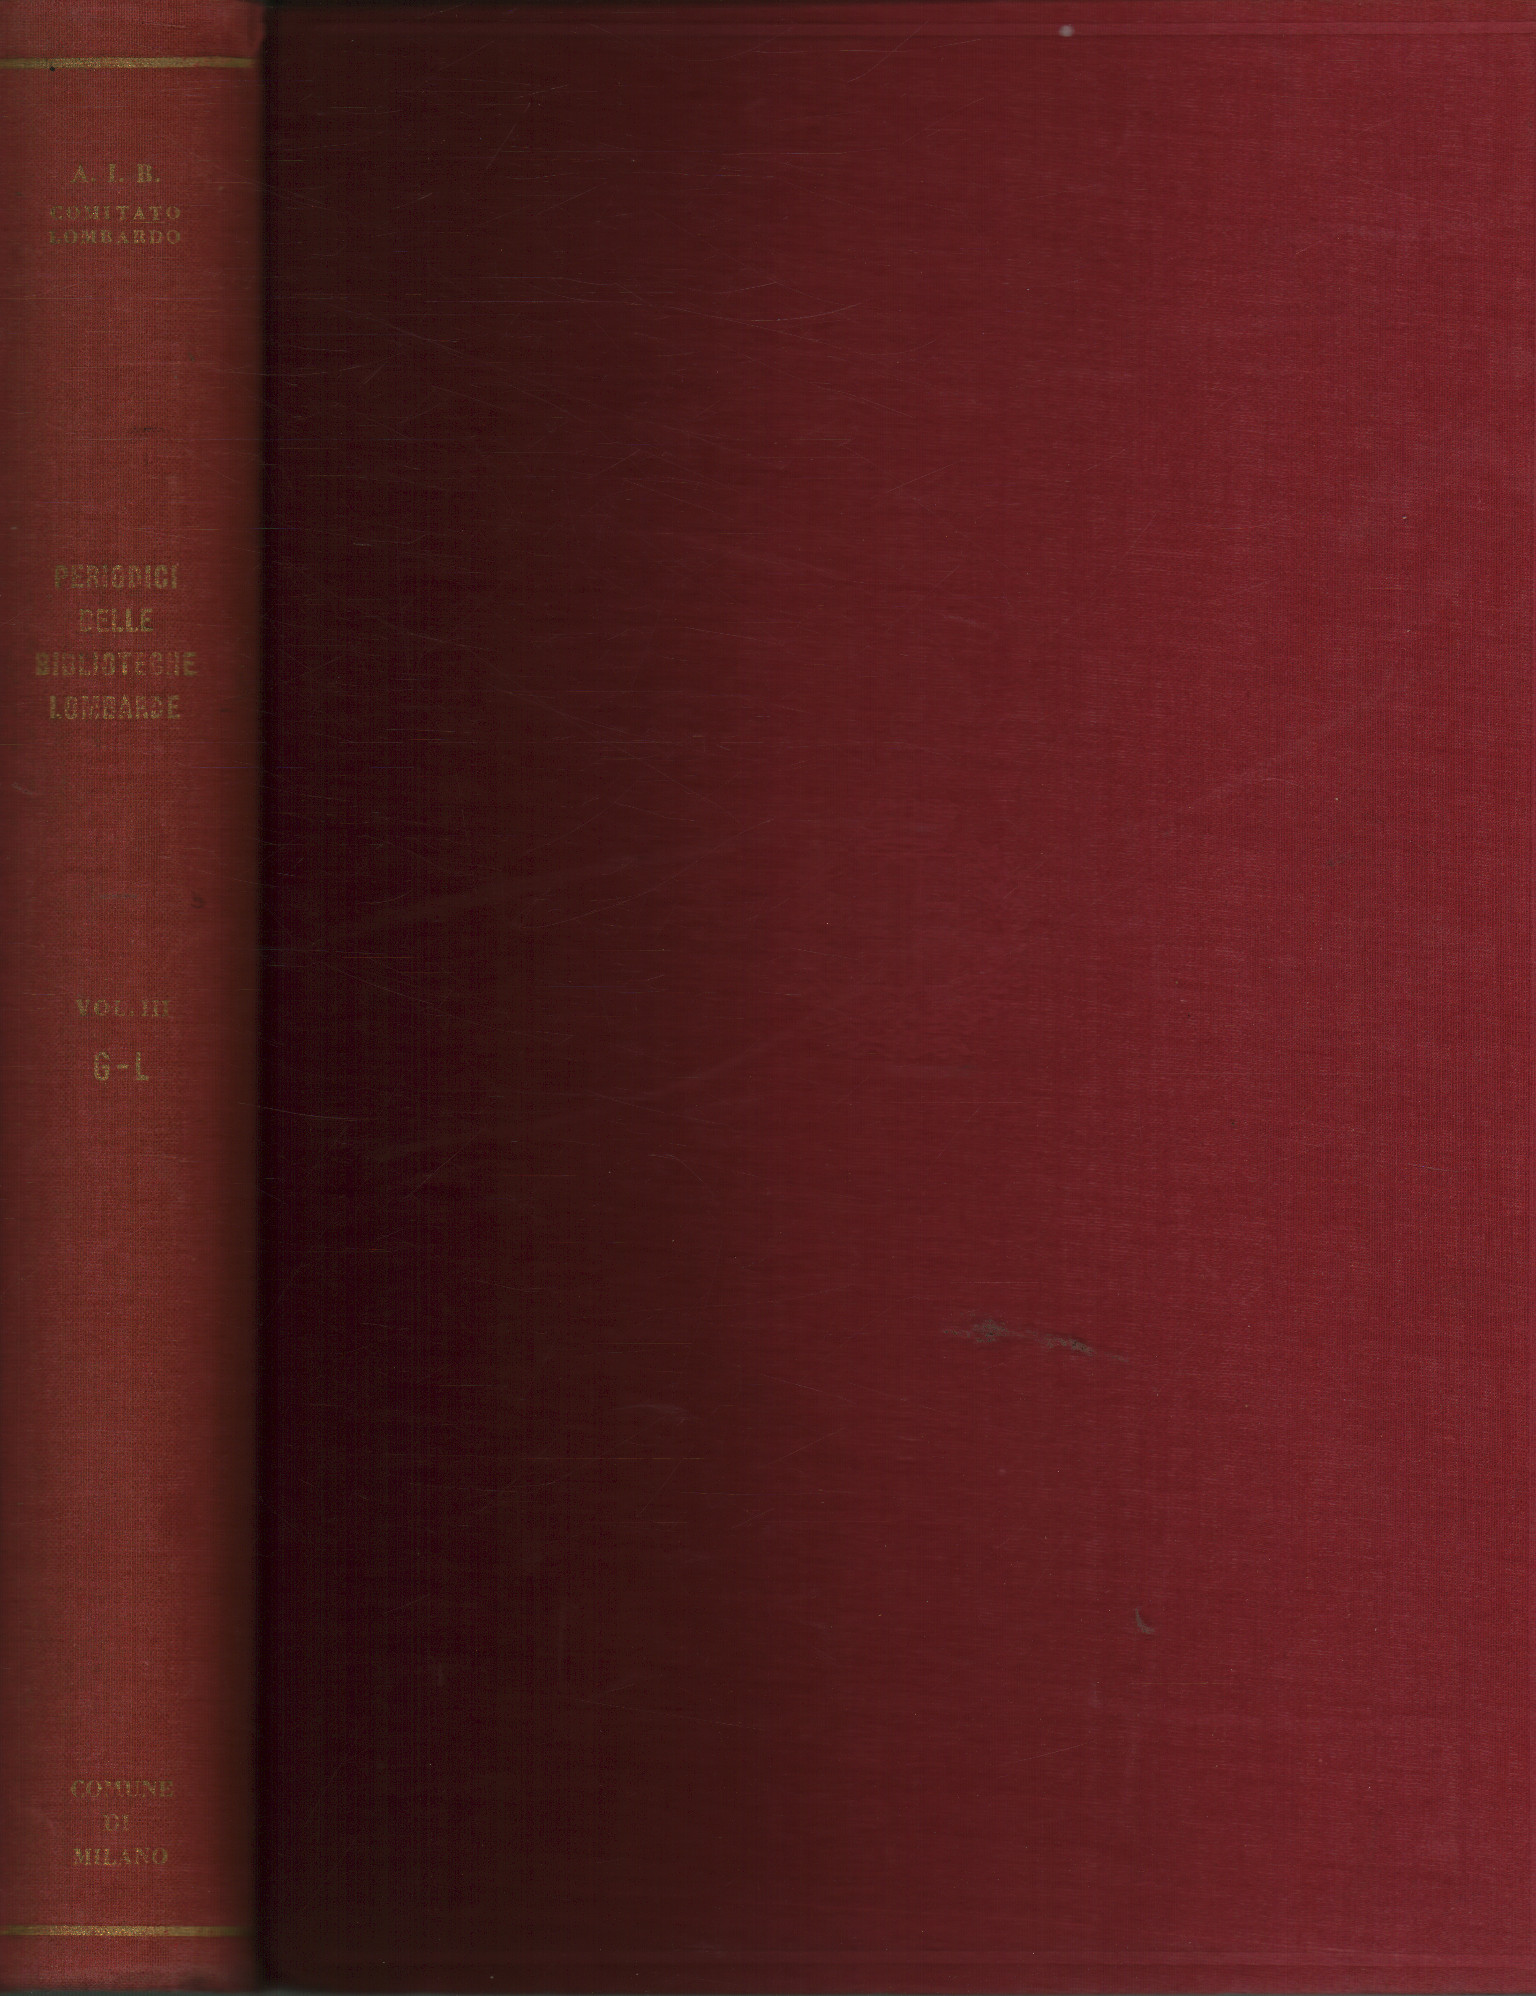 Catalogue des périodiques des bibliothèques lombardes., AA.VV